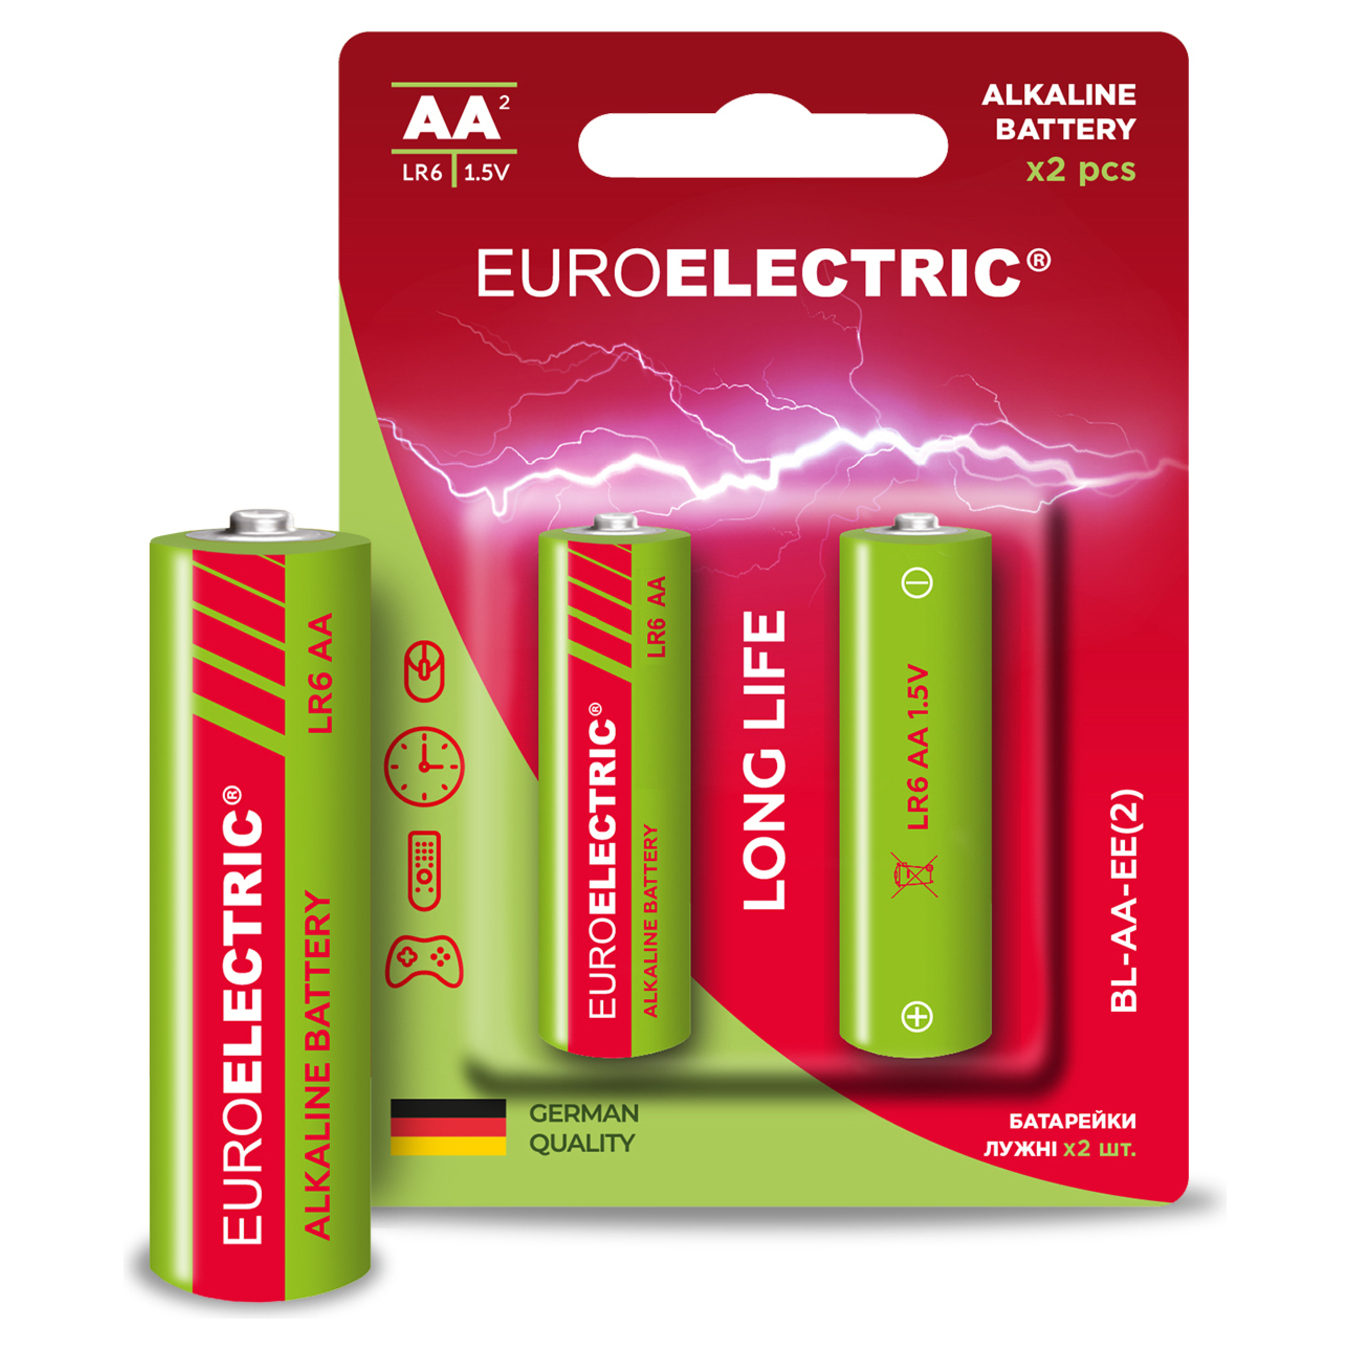 Alkaline batteries Euroelectric AA LR6 1.5V 2pcs